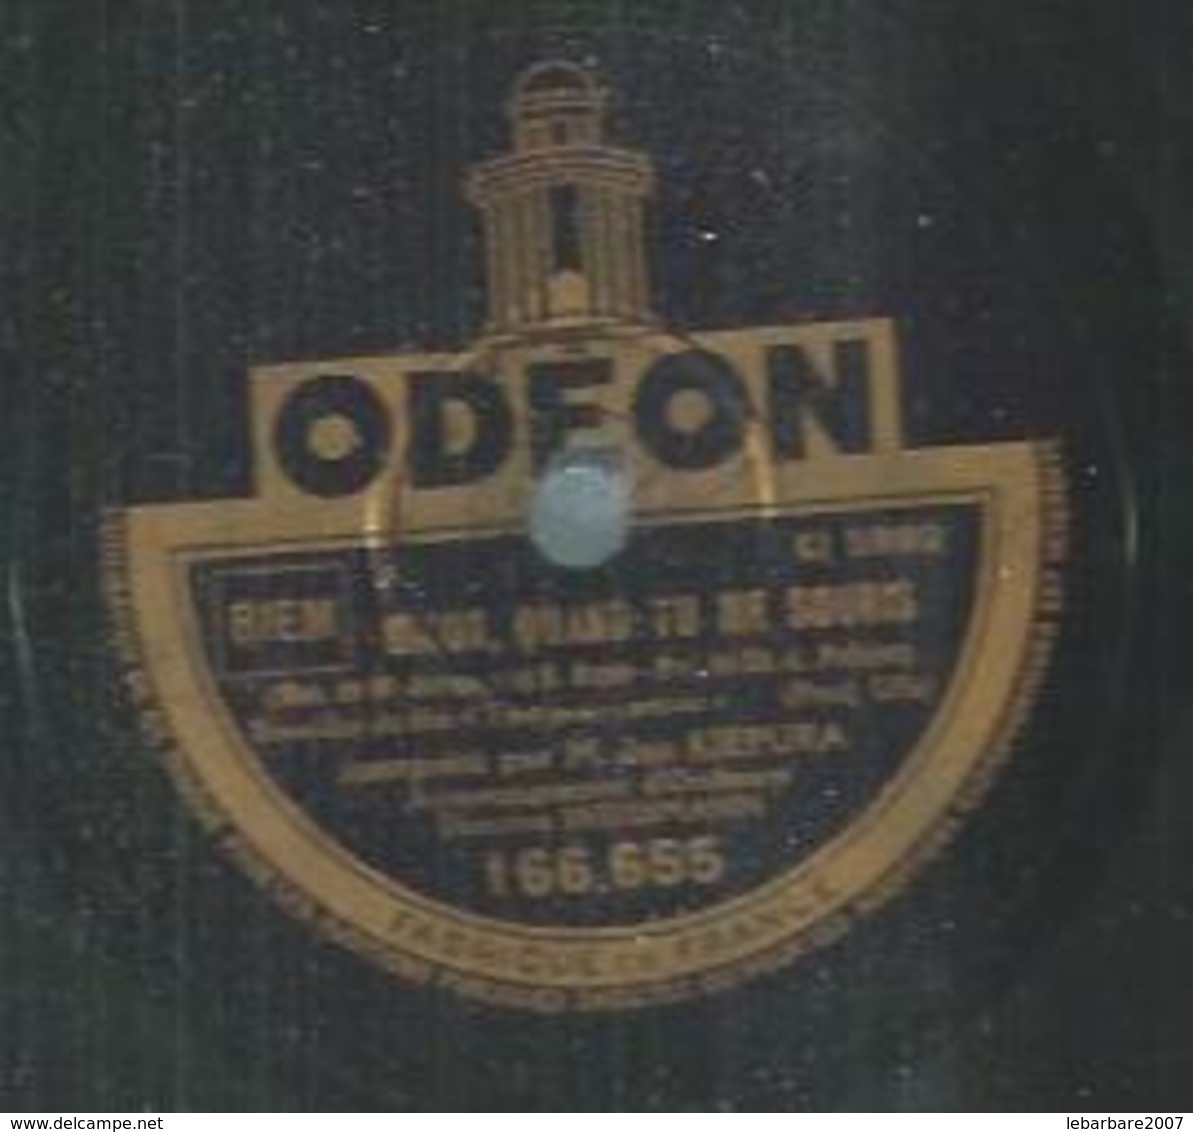 78 Tours - JAN KIEPURA  - ODEON 166655  " NINON, QUAND TU ME SOURIS " + " O MADONNA !  " - 78 T - Disques Pour Gramophone